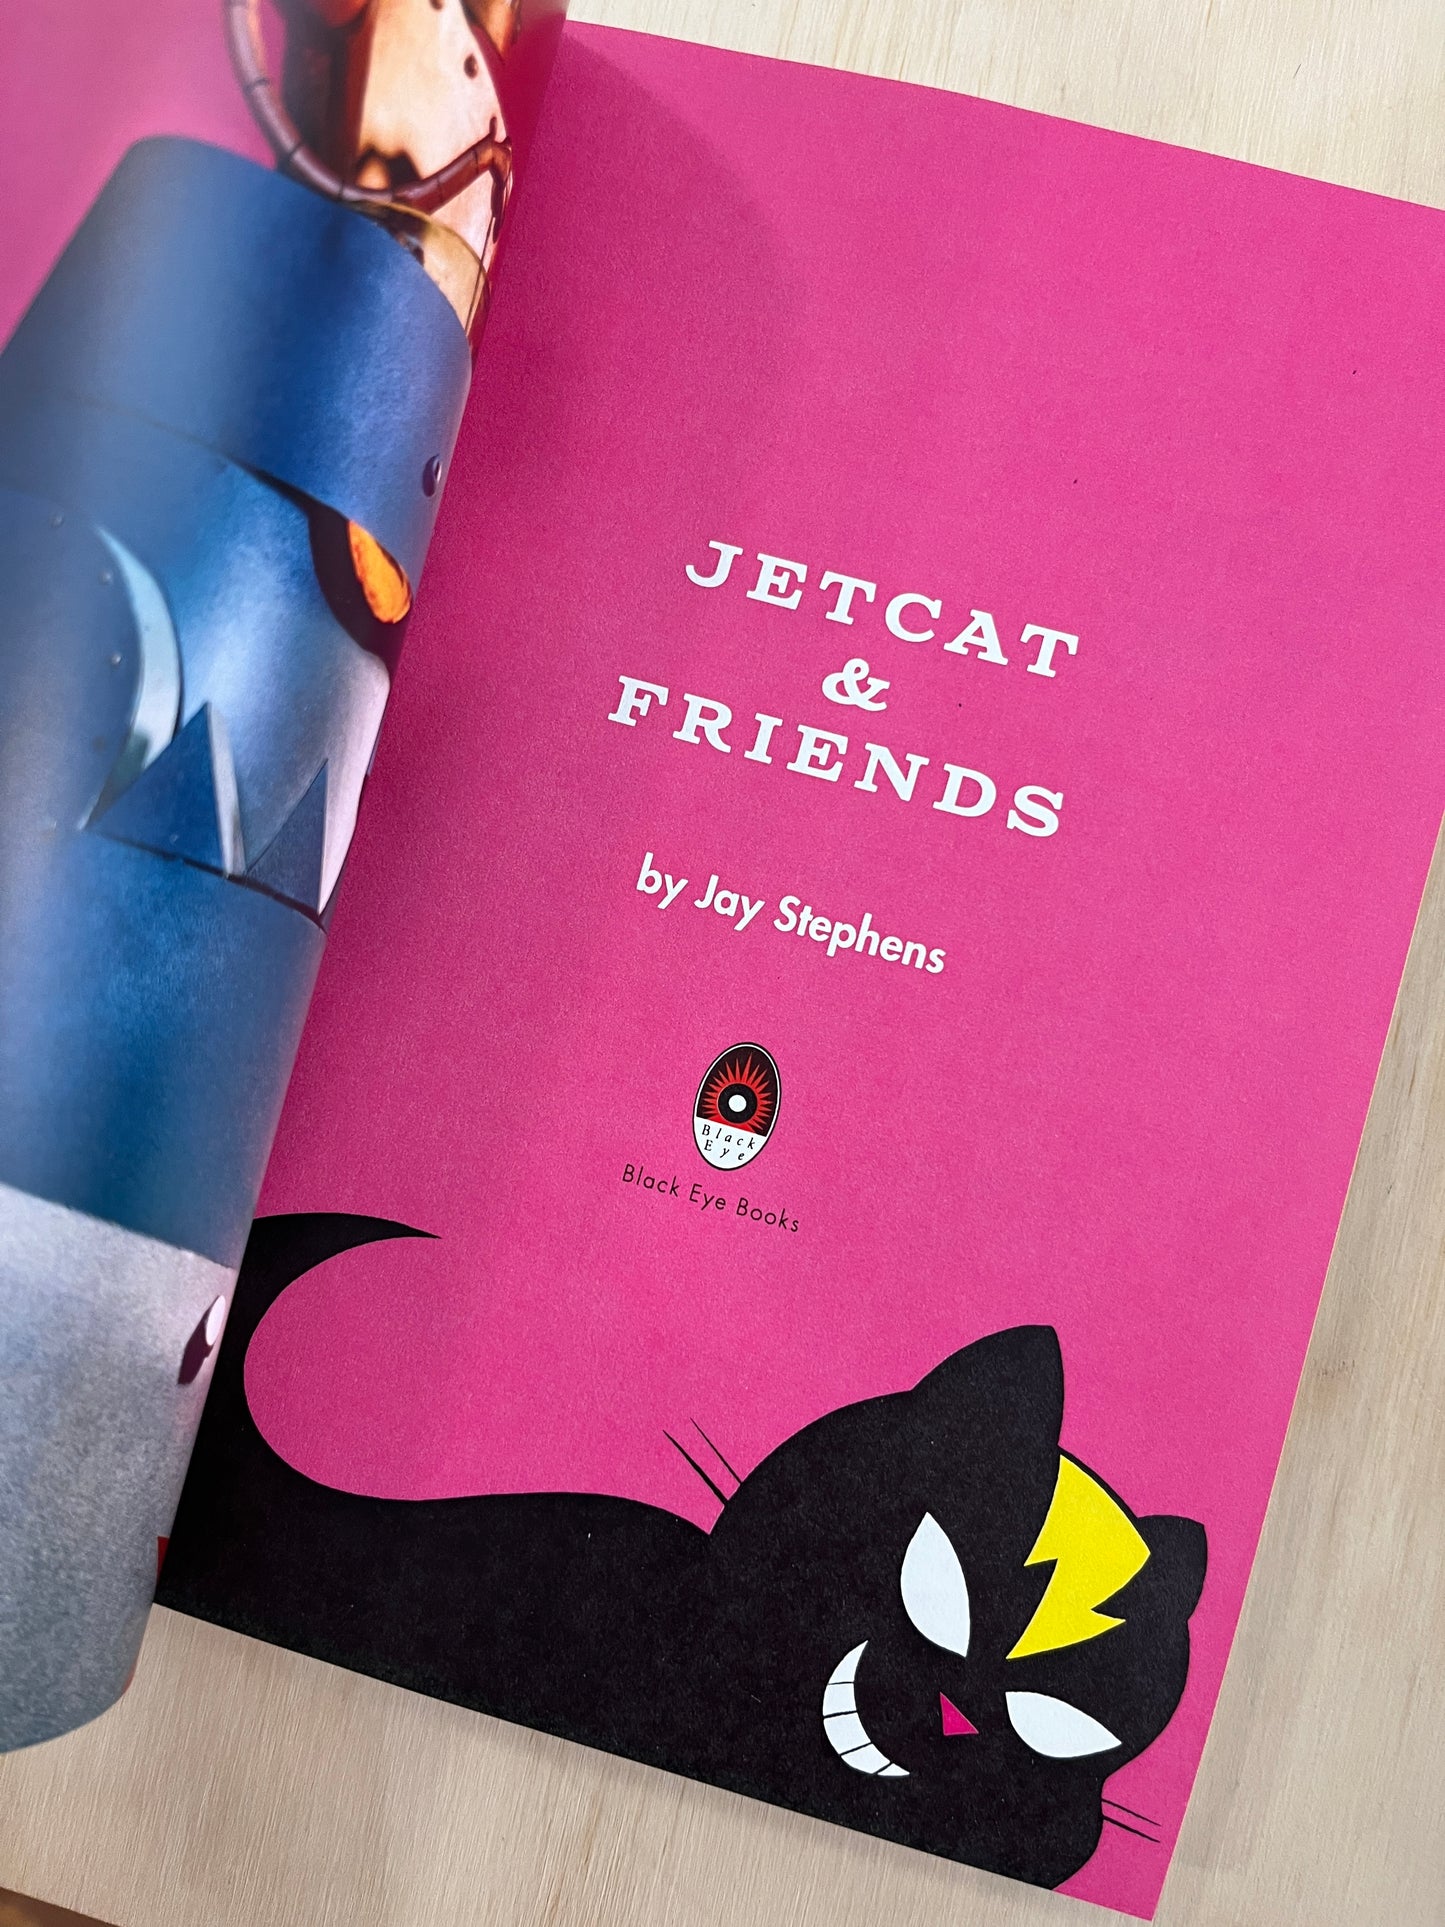 Jetcat & Friends